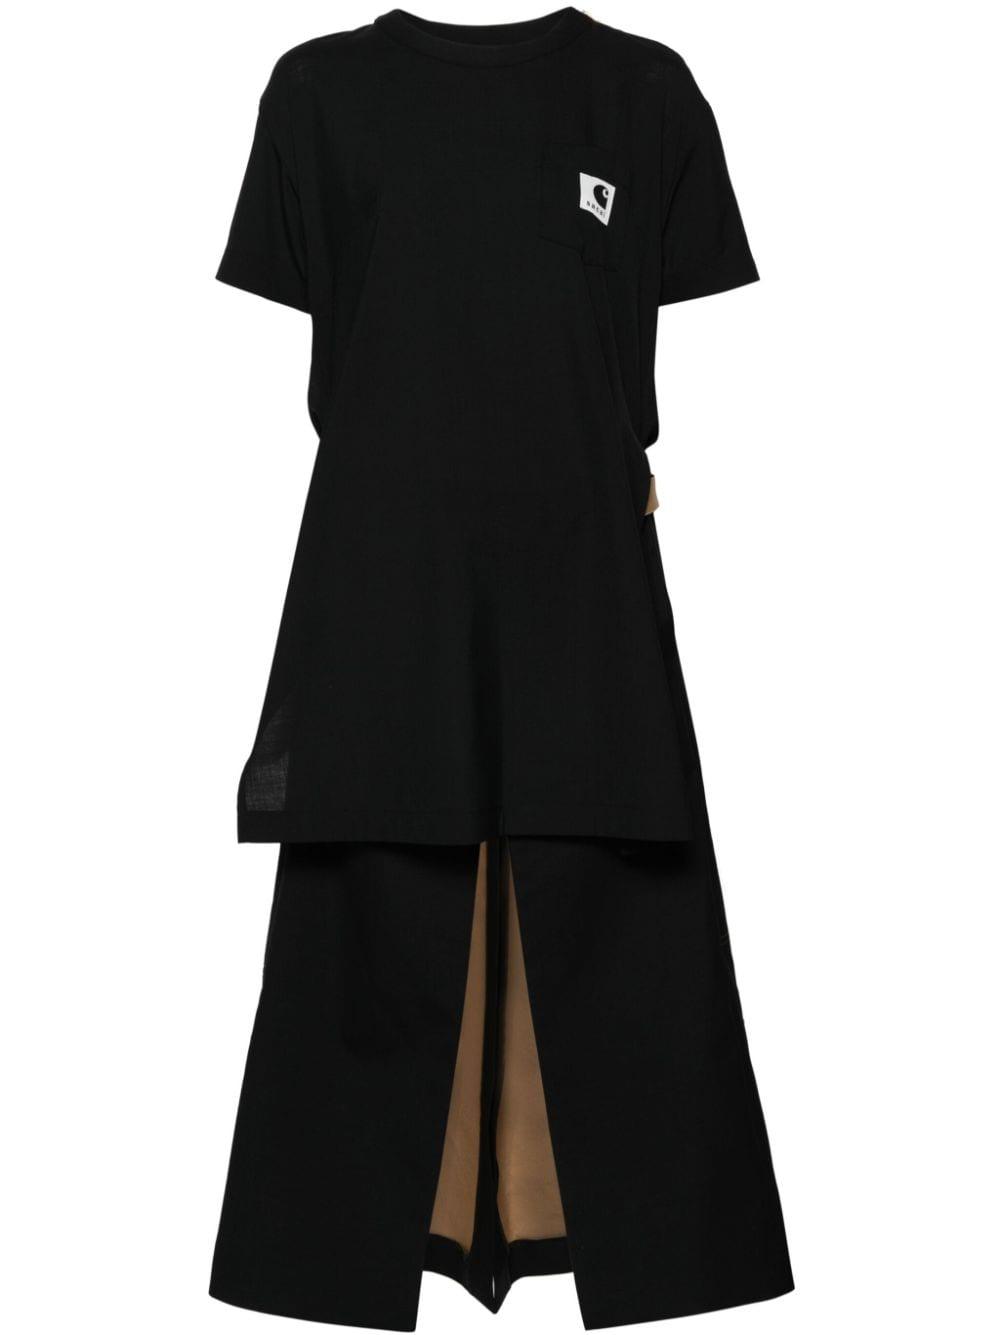 Sacai X Carhartt Wip Suiting Bonding Dress in Black | Lyst Australia